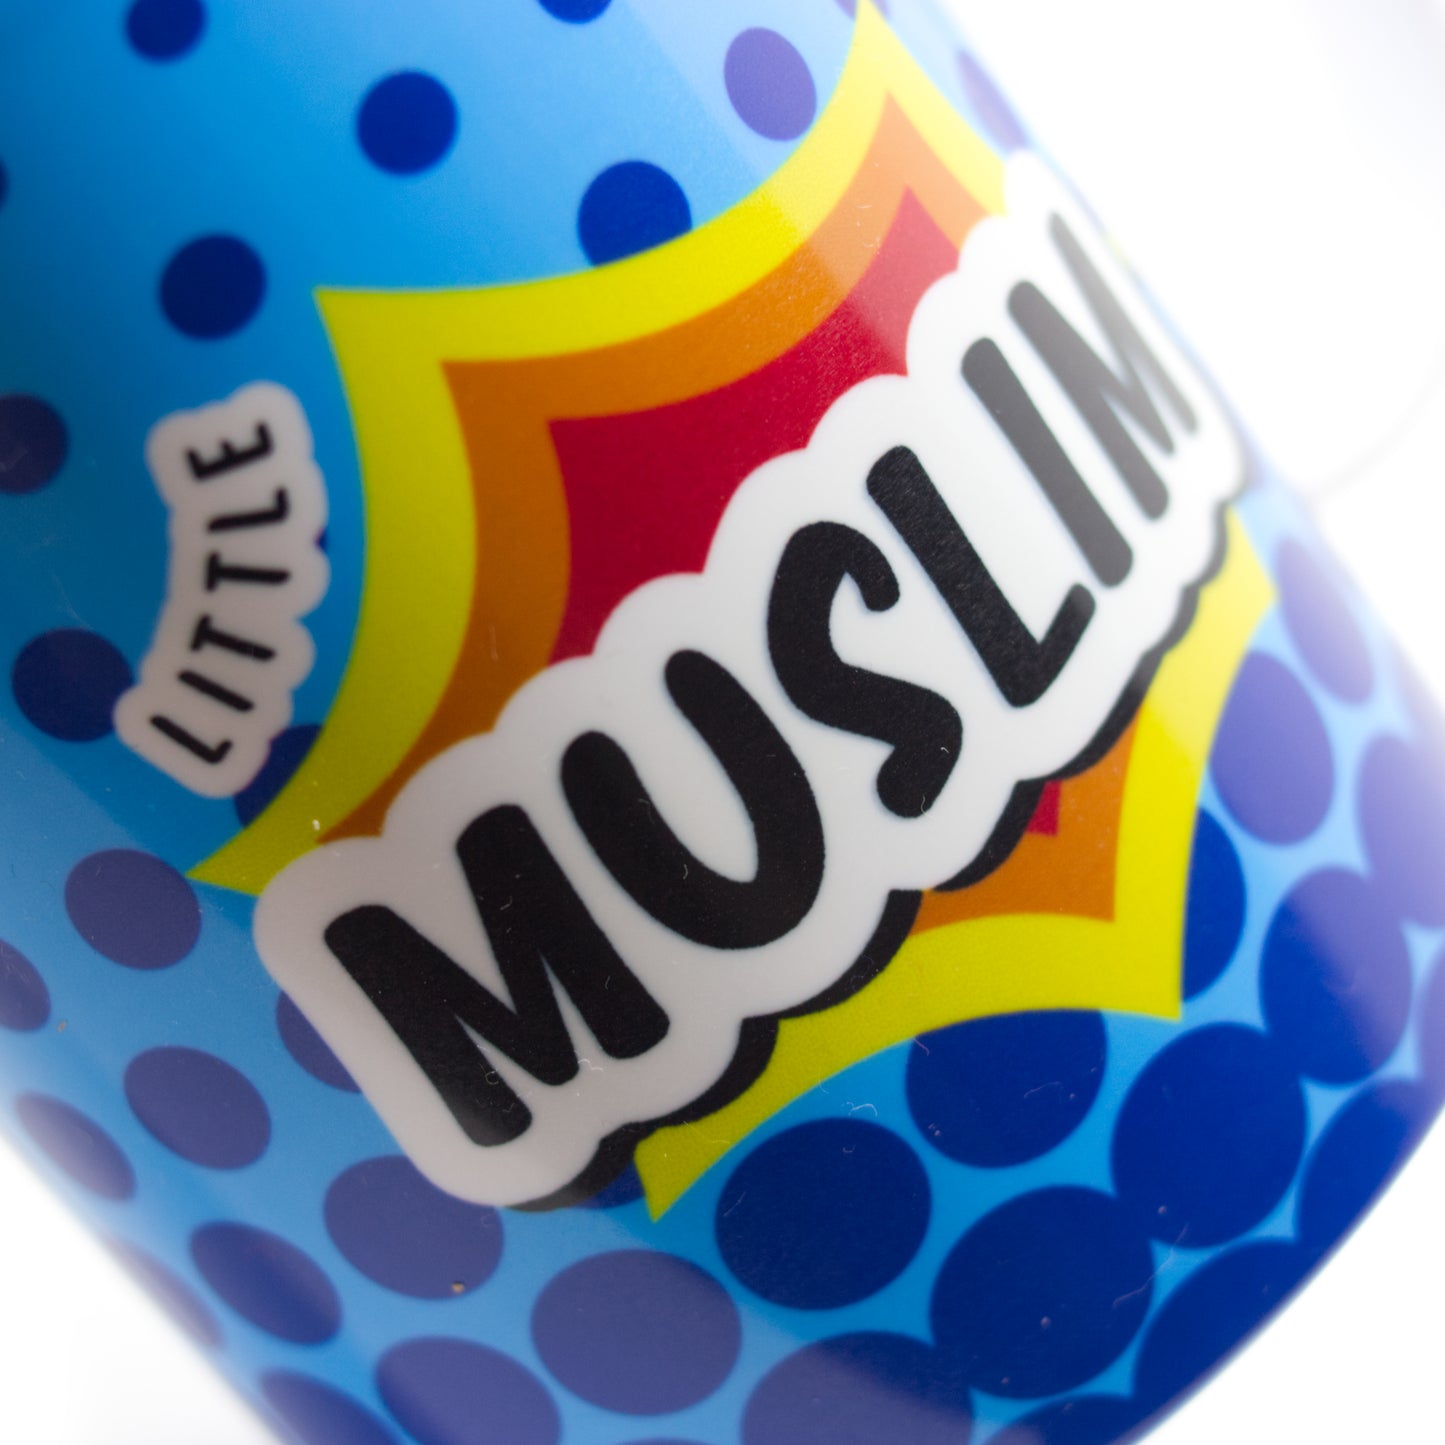 Little Muslim Mug